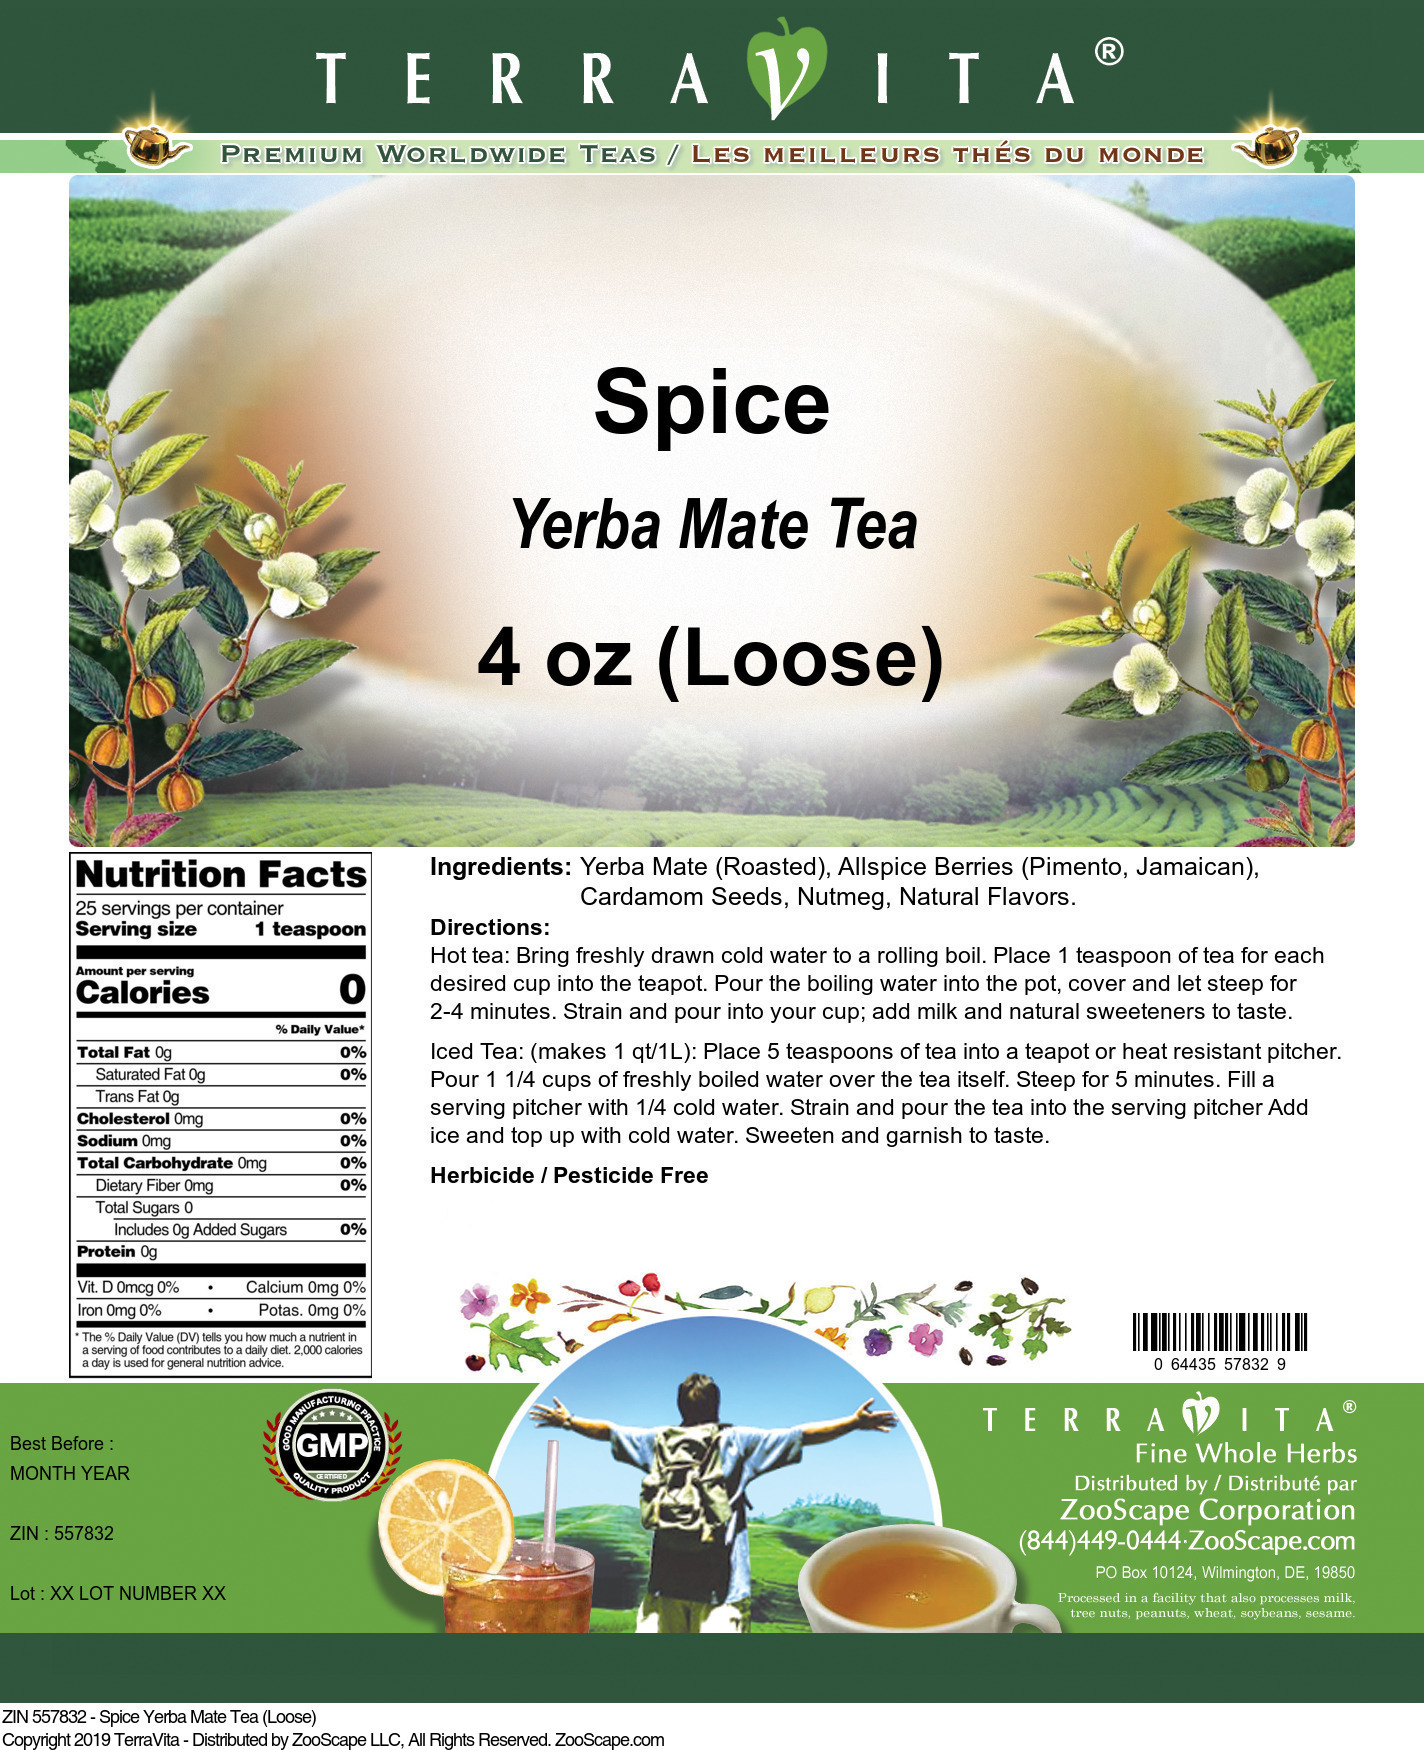 Spice Yerba Mate Tea (Loose) - Label